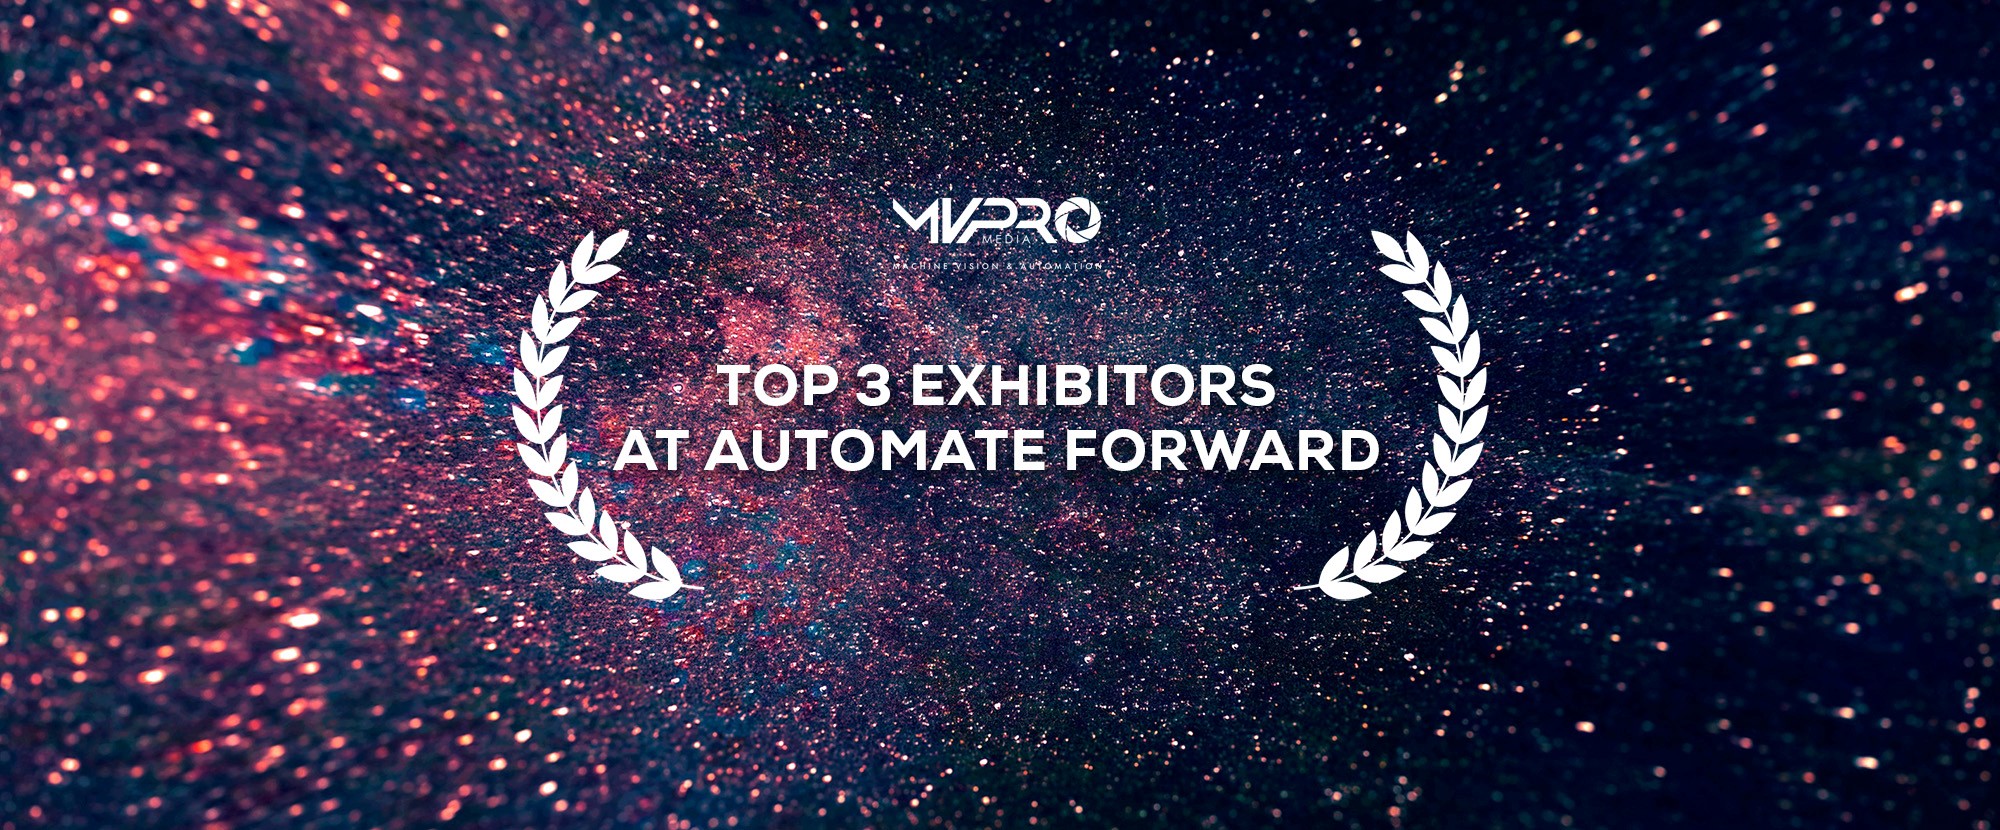 Top 3 exhibitors at Automate Forward